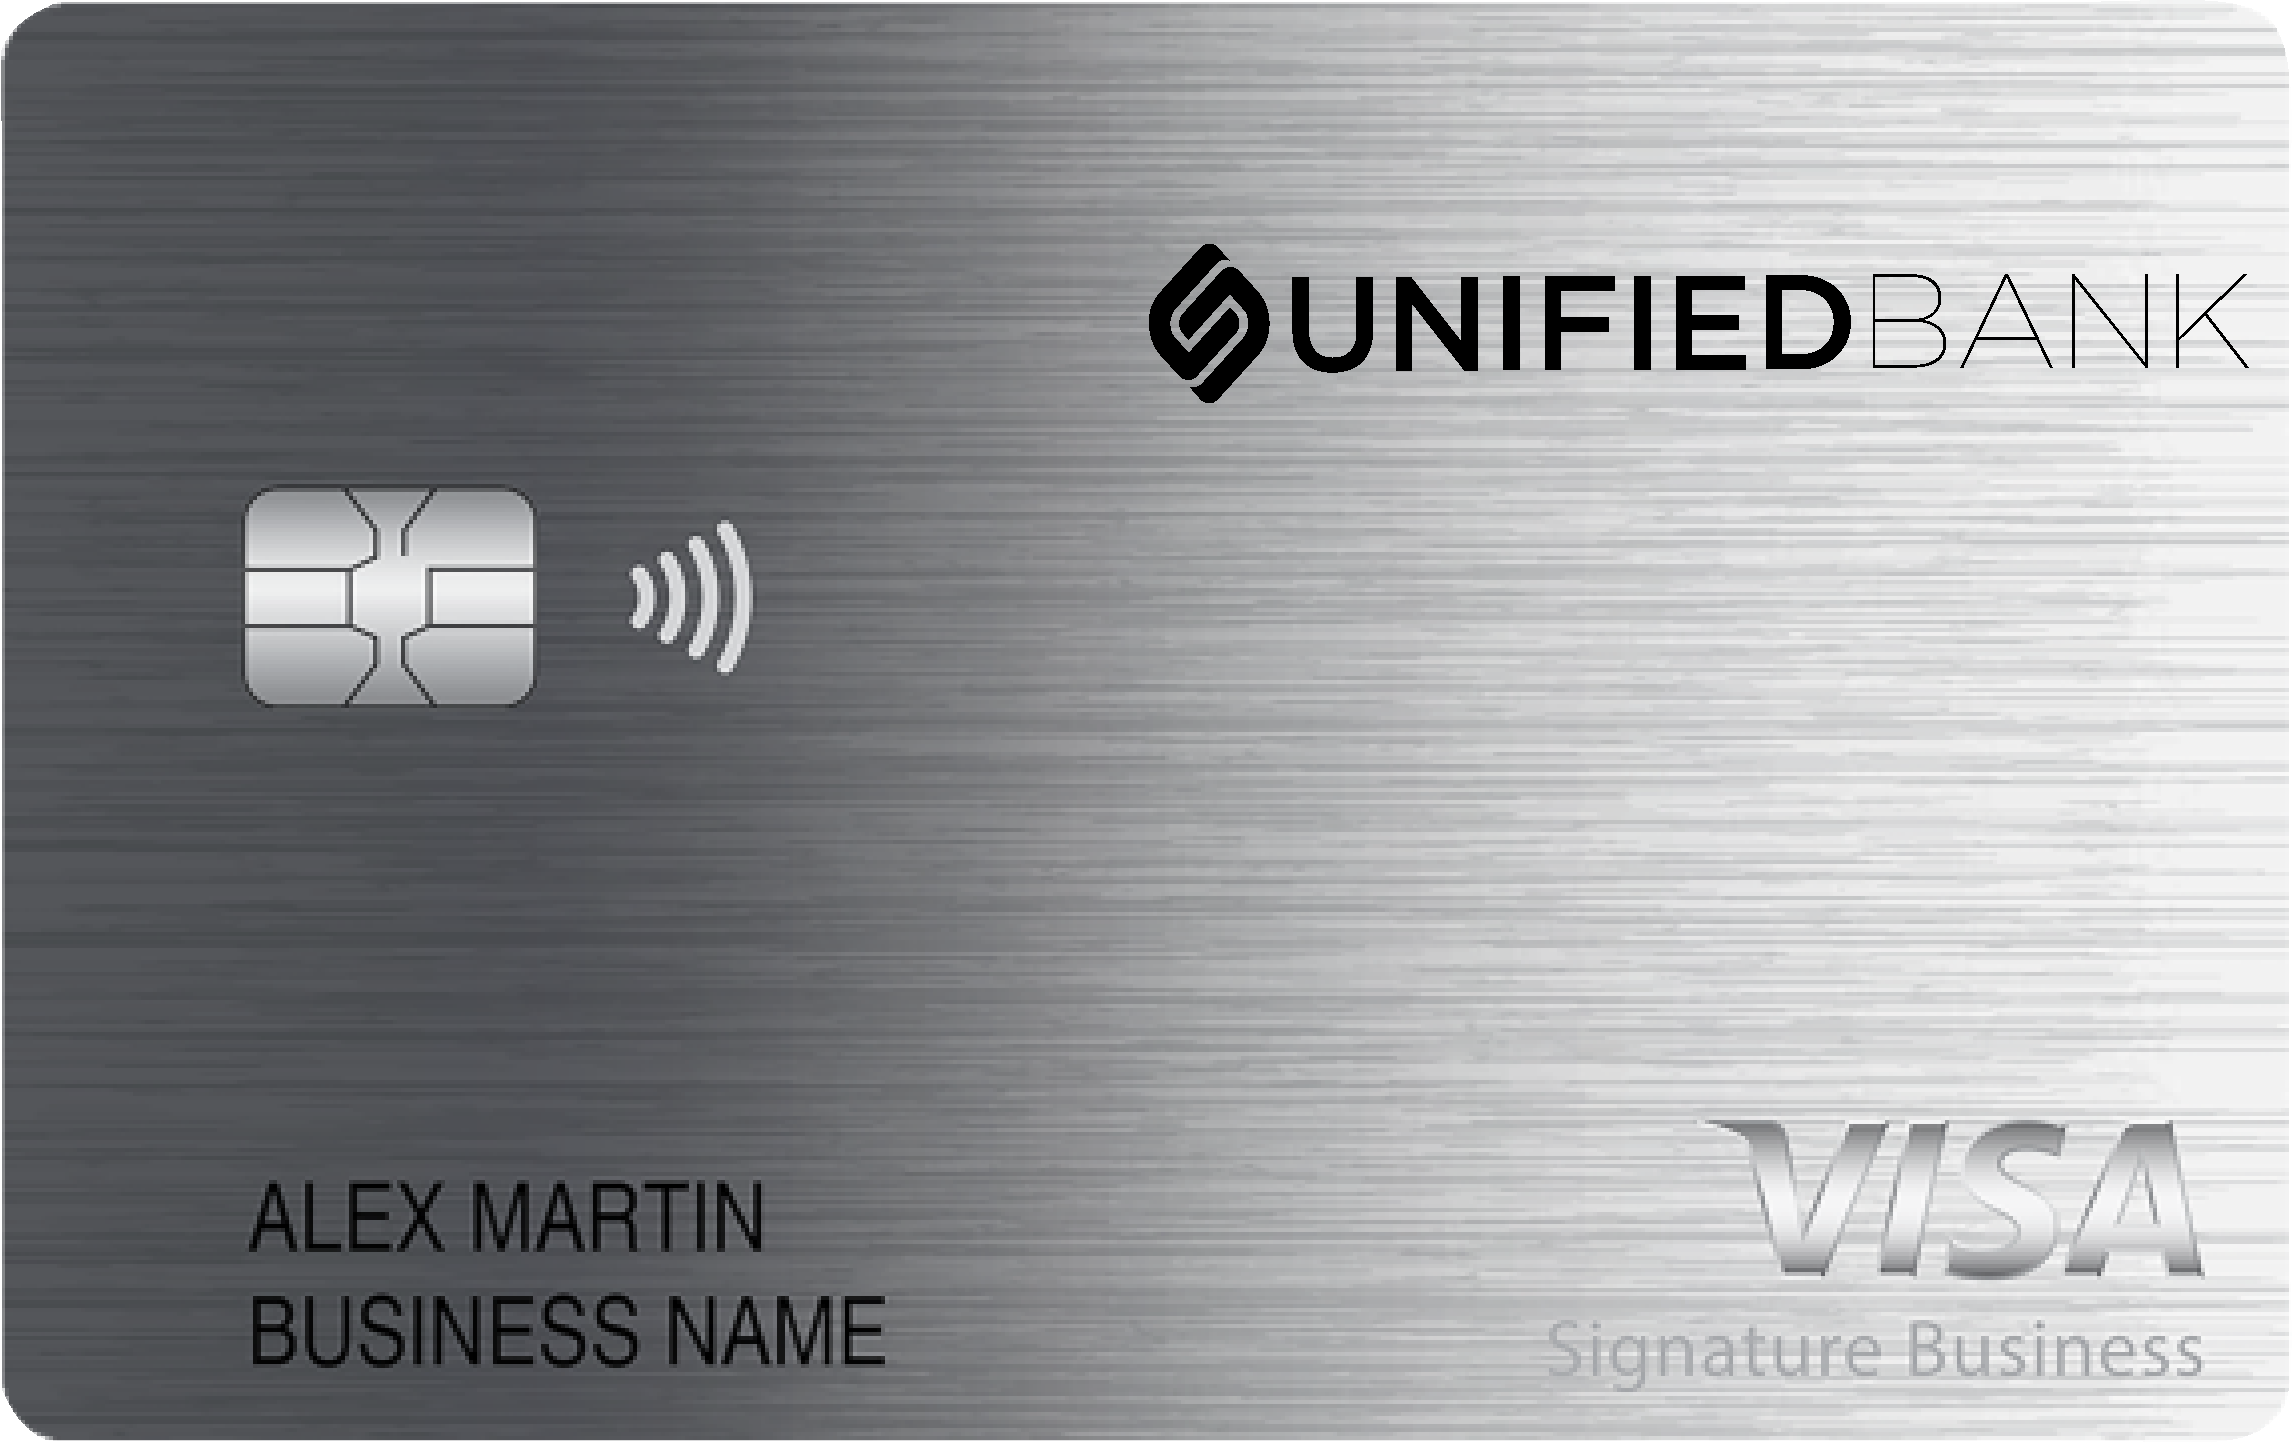 Unified Bank Smart Business Rewards Card